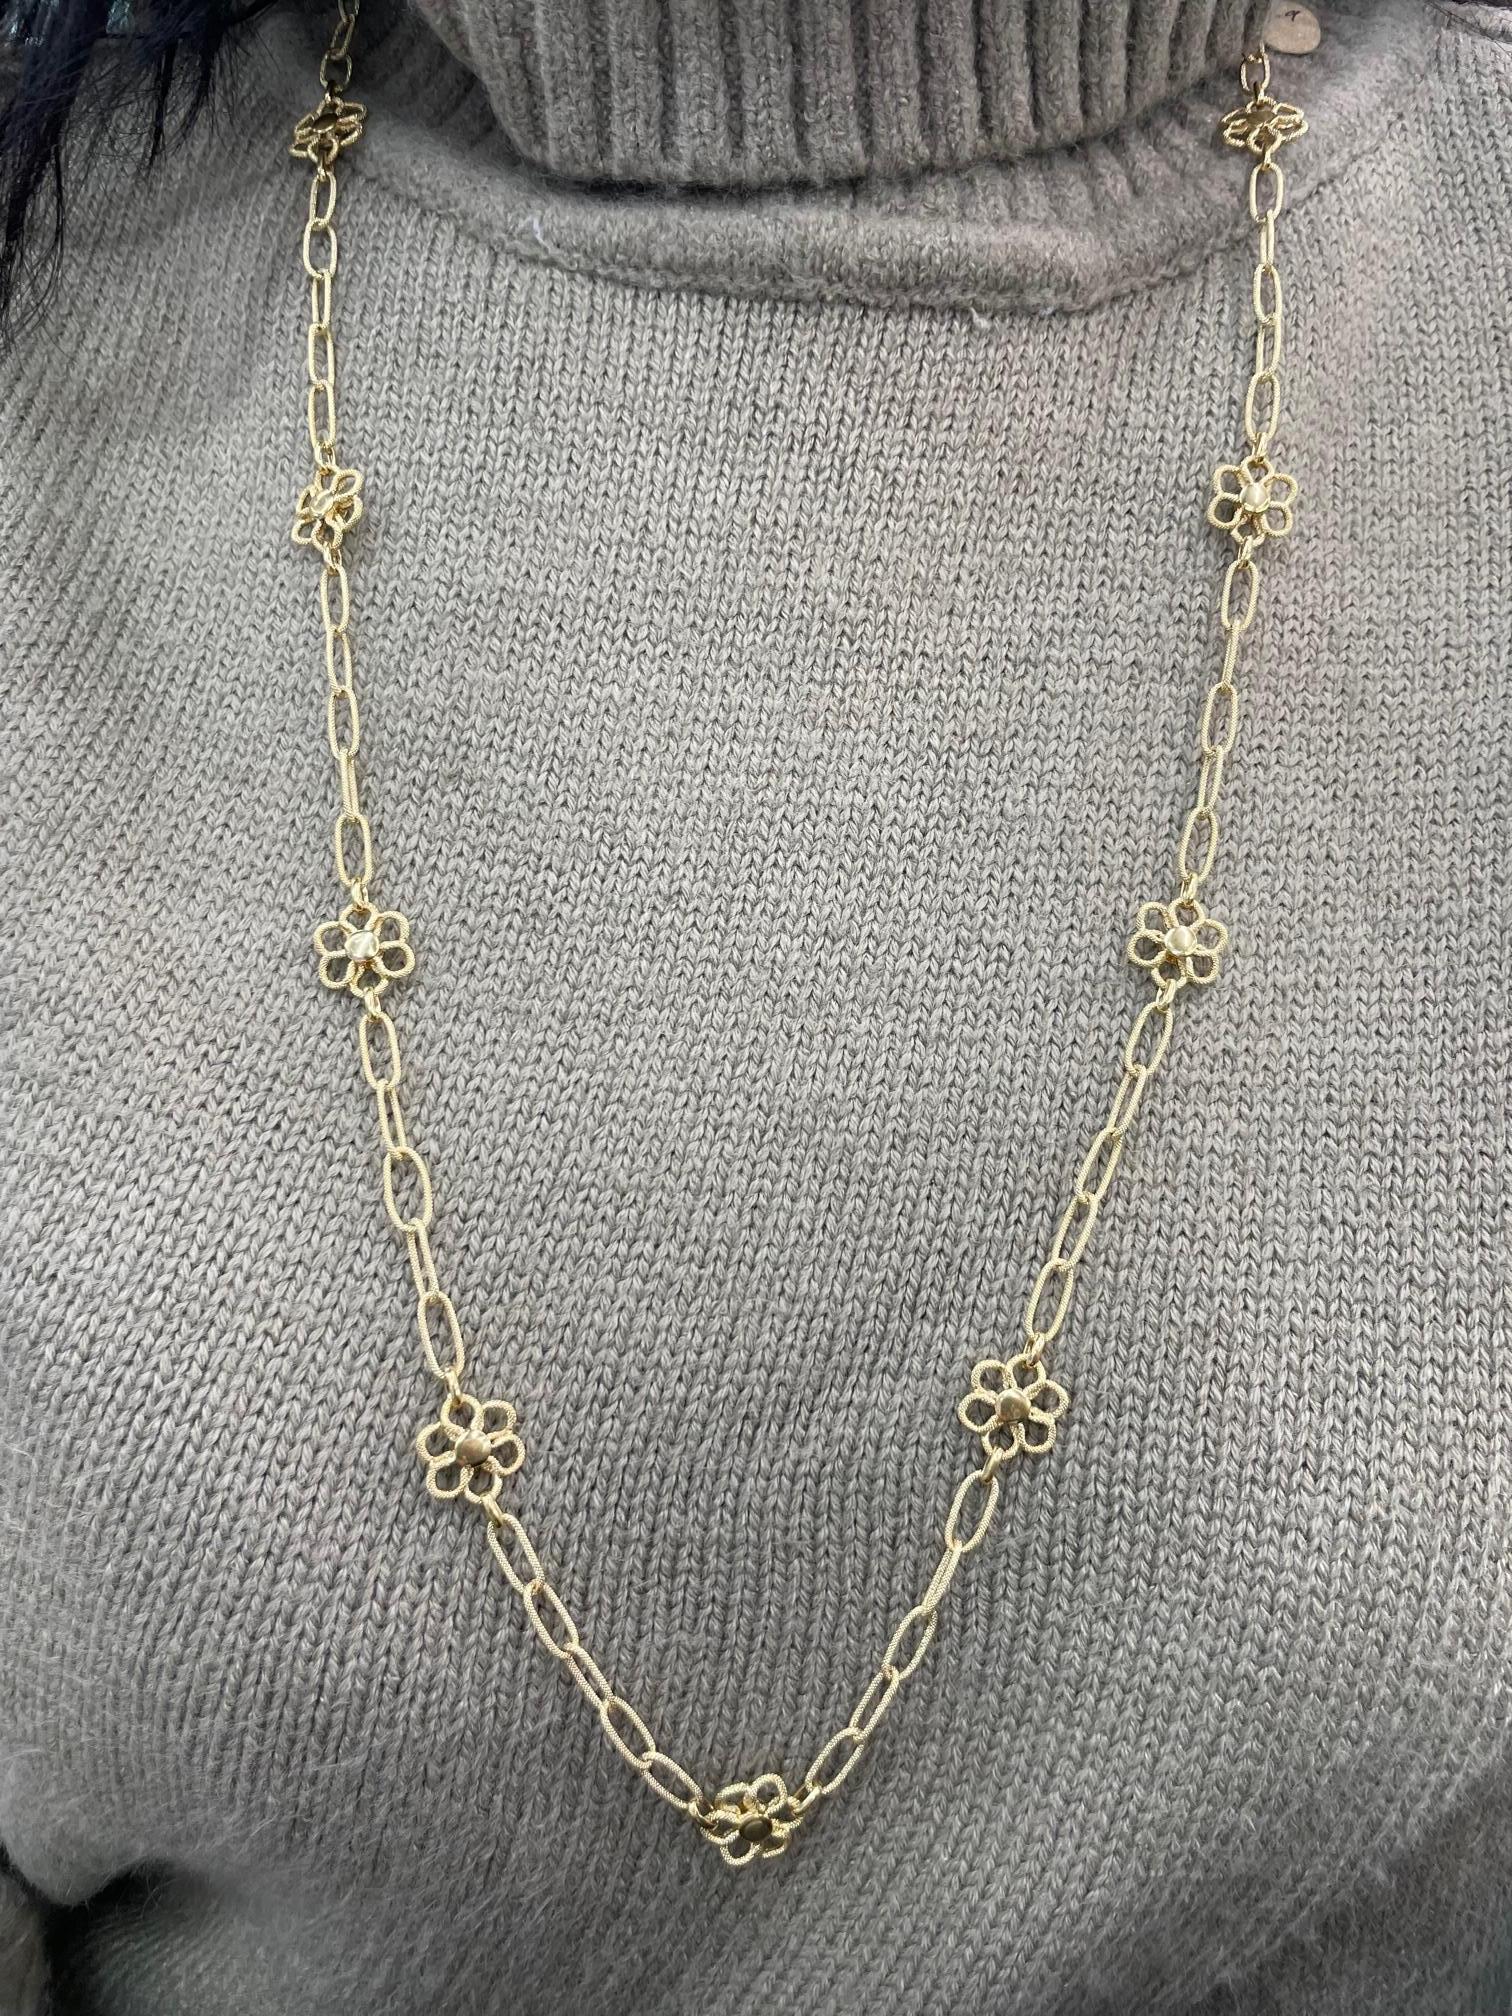 korea necklace gold